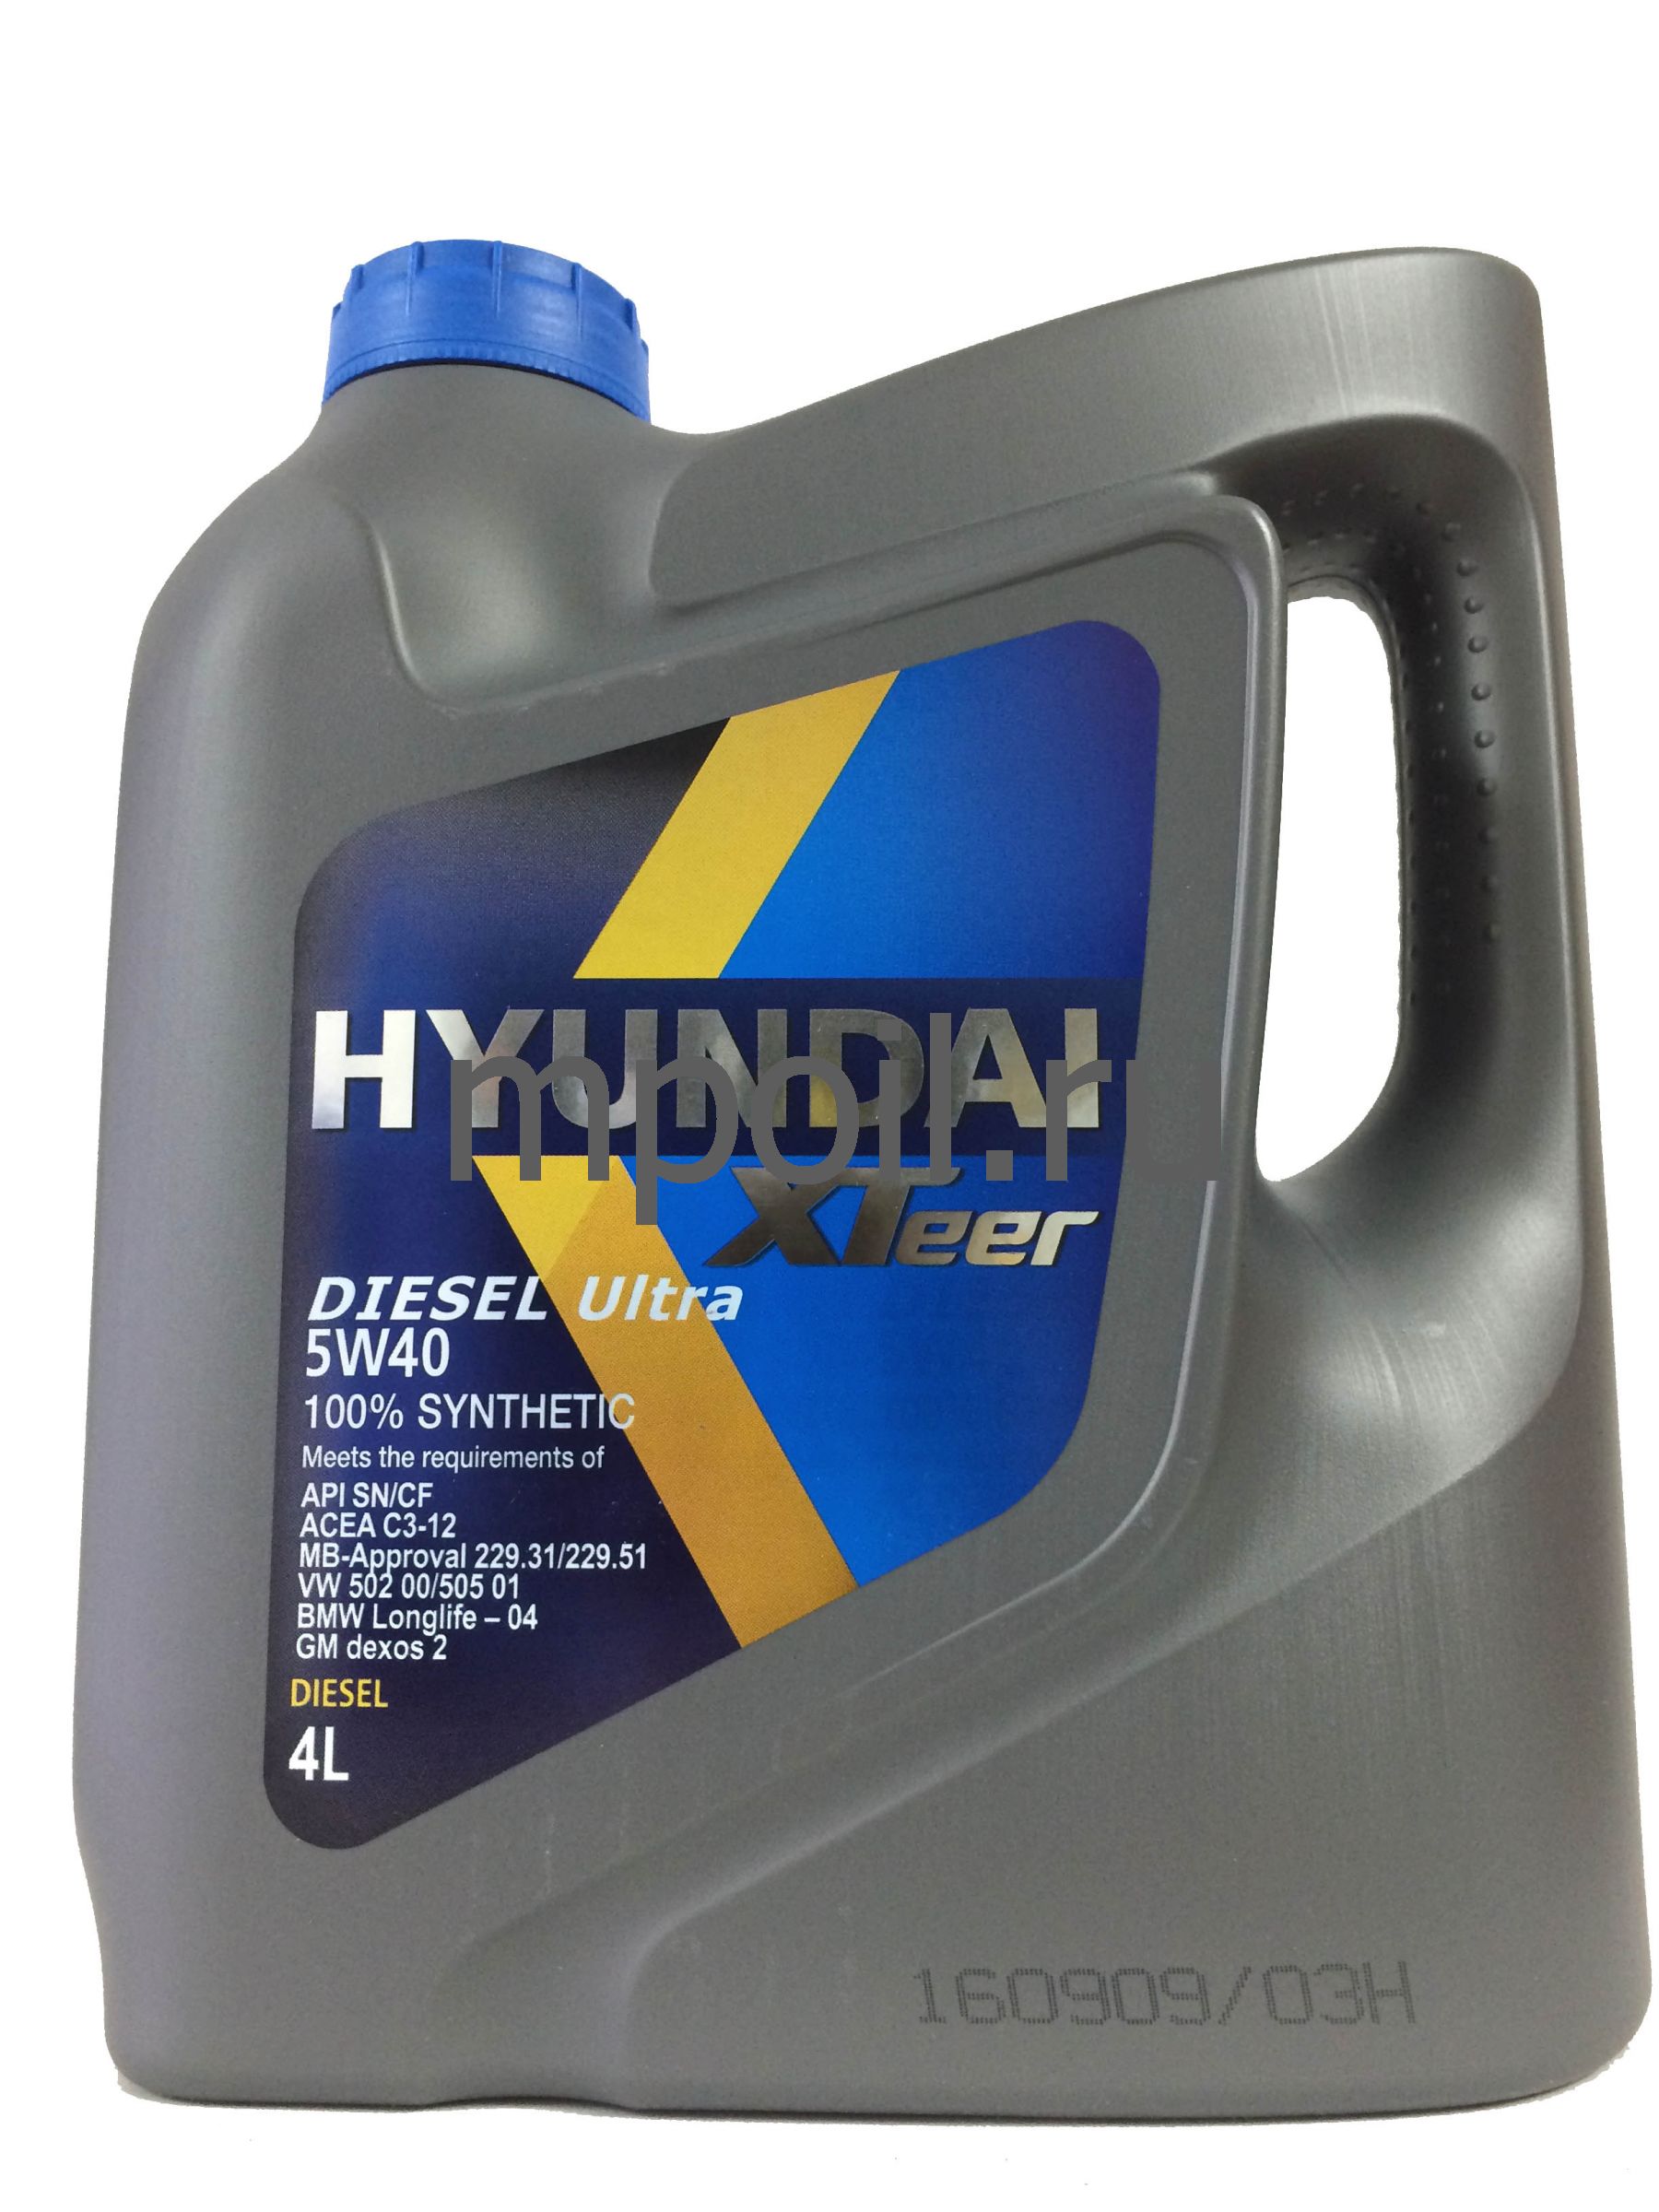 Масло hyundai diesel ultra. Hyundai XTEER Diesel Ultra. Hyundai XTEER 5w30. XTEER Diesel Ultra 5w40. Hyundai XTEER 5w40.